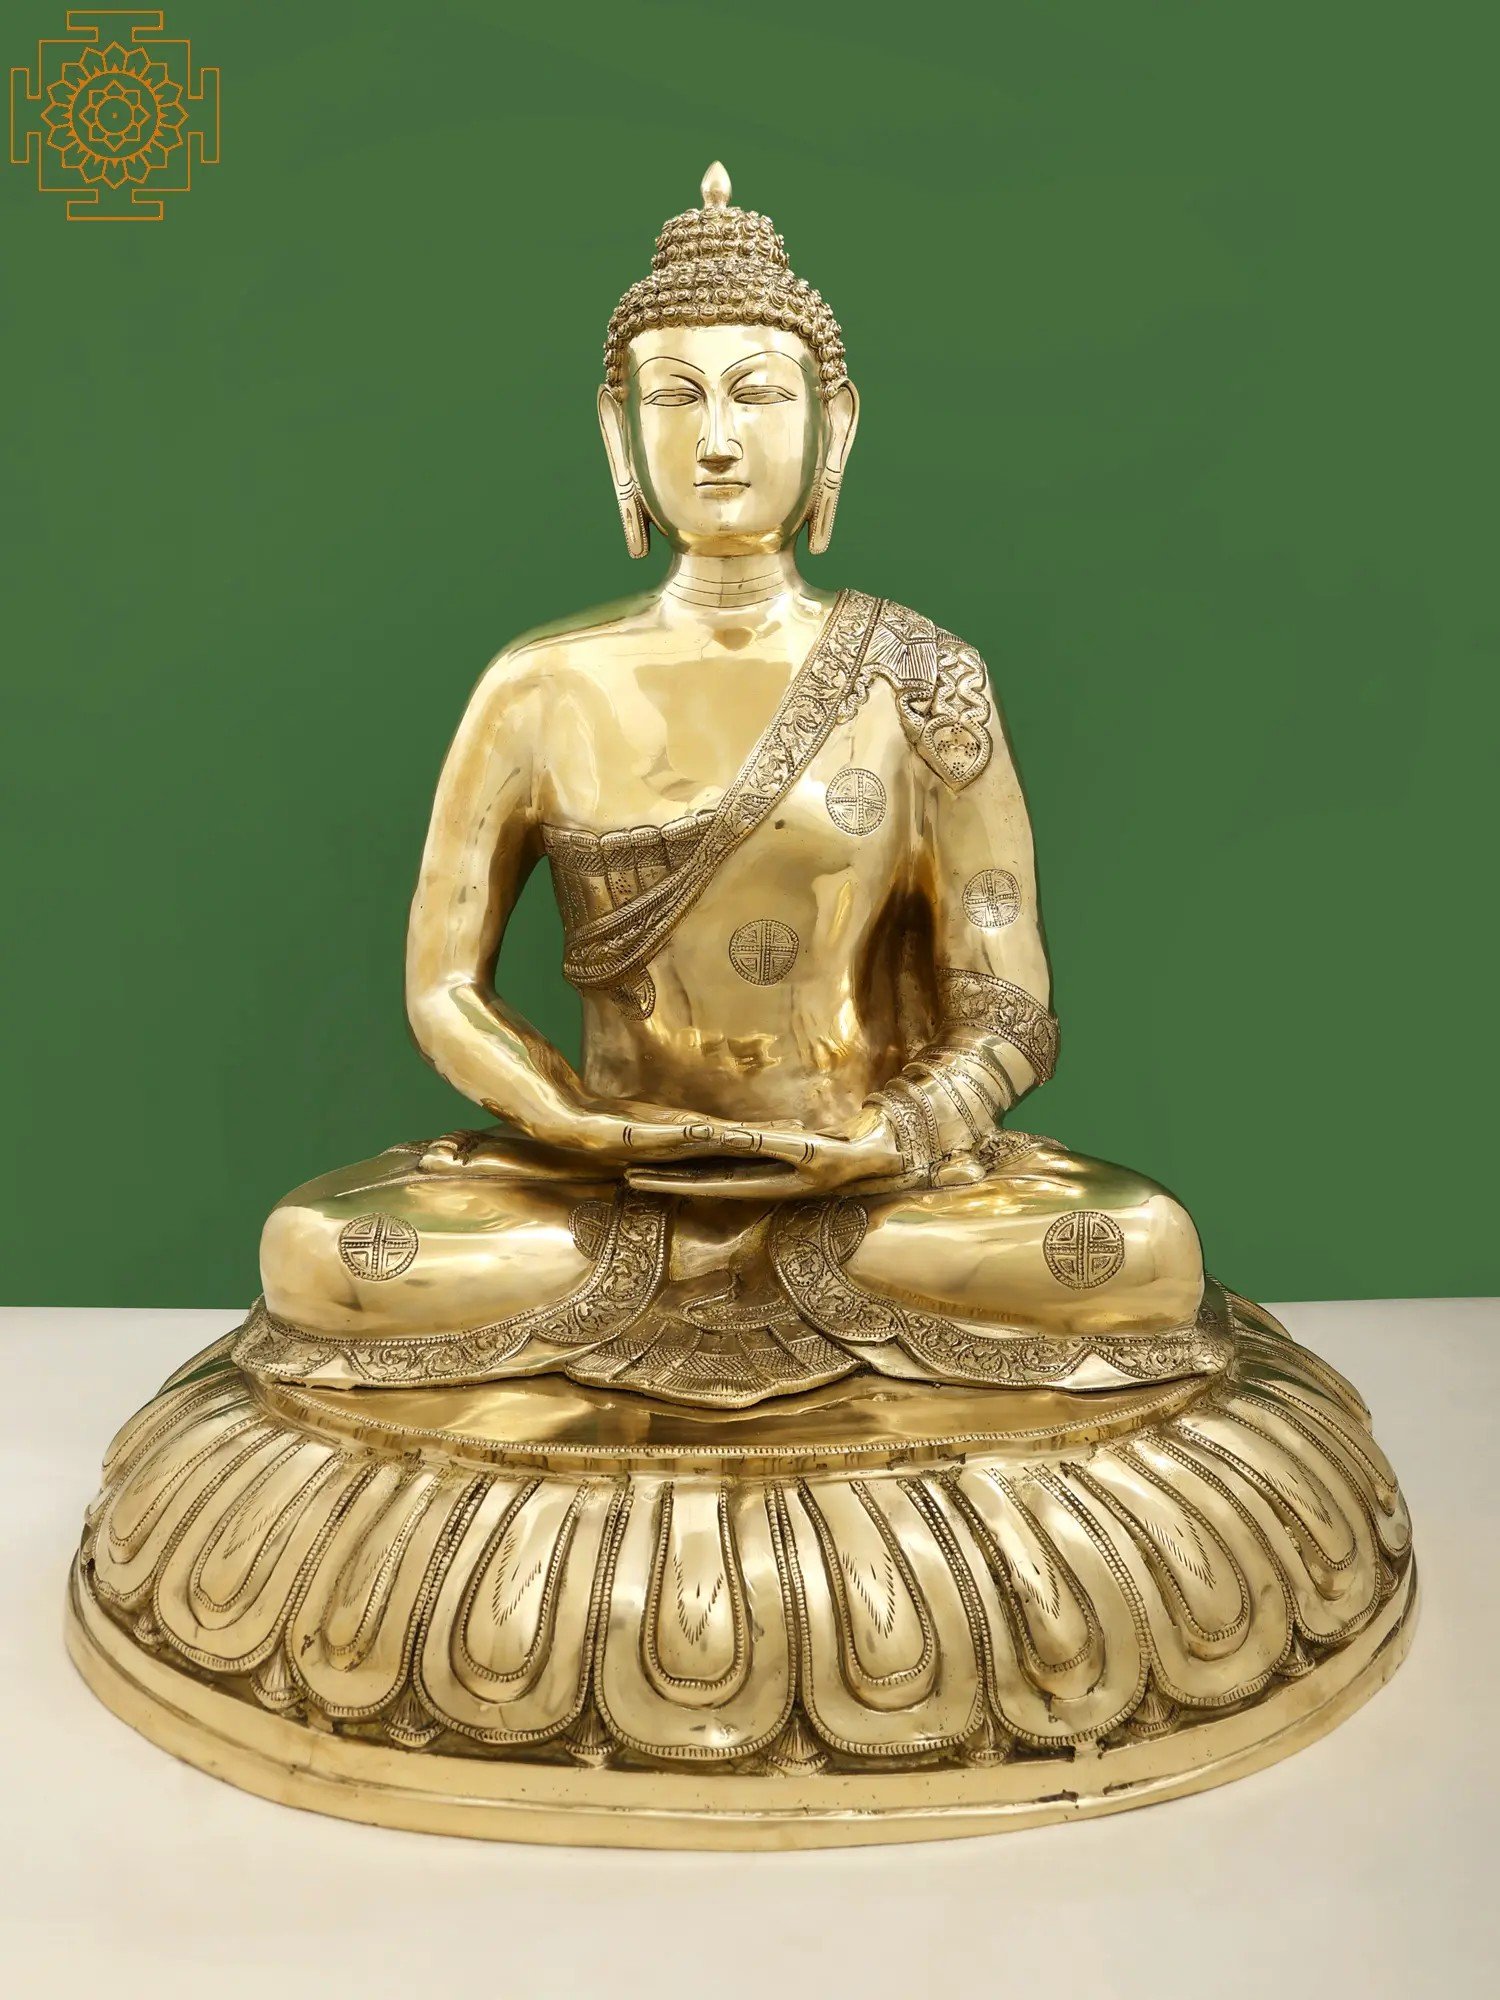 2 x Buddist/ Hindu Miniature Brass figures cast in India 